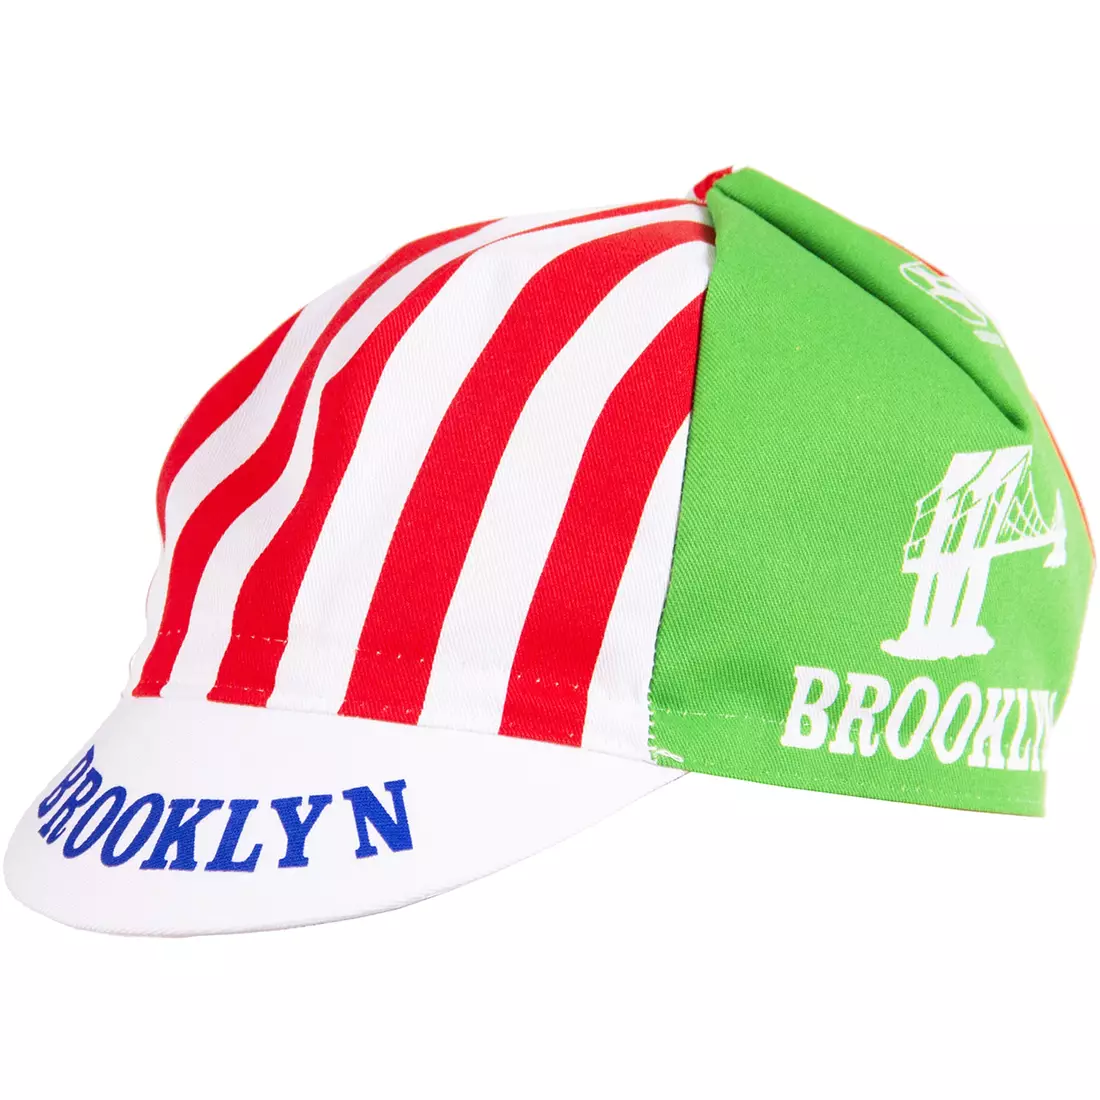 GIORDANA SS18 cycling cap - Brooklyn - Italia Green GI-COCA-TEAM-BRGR one size